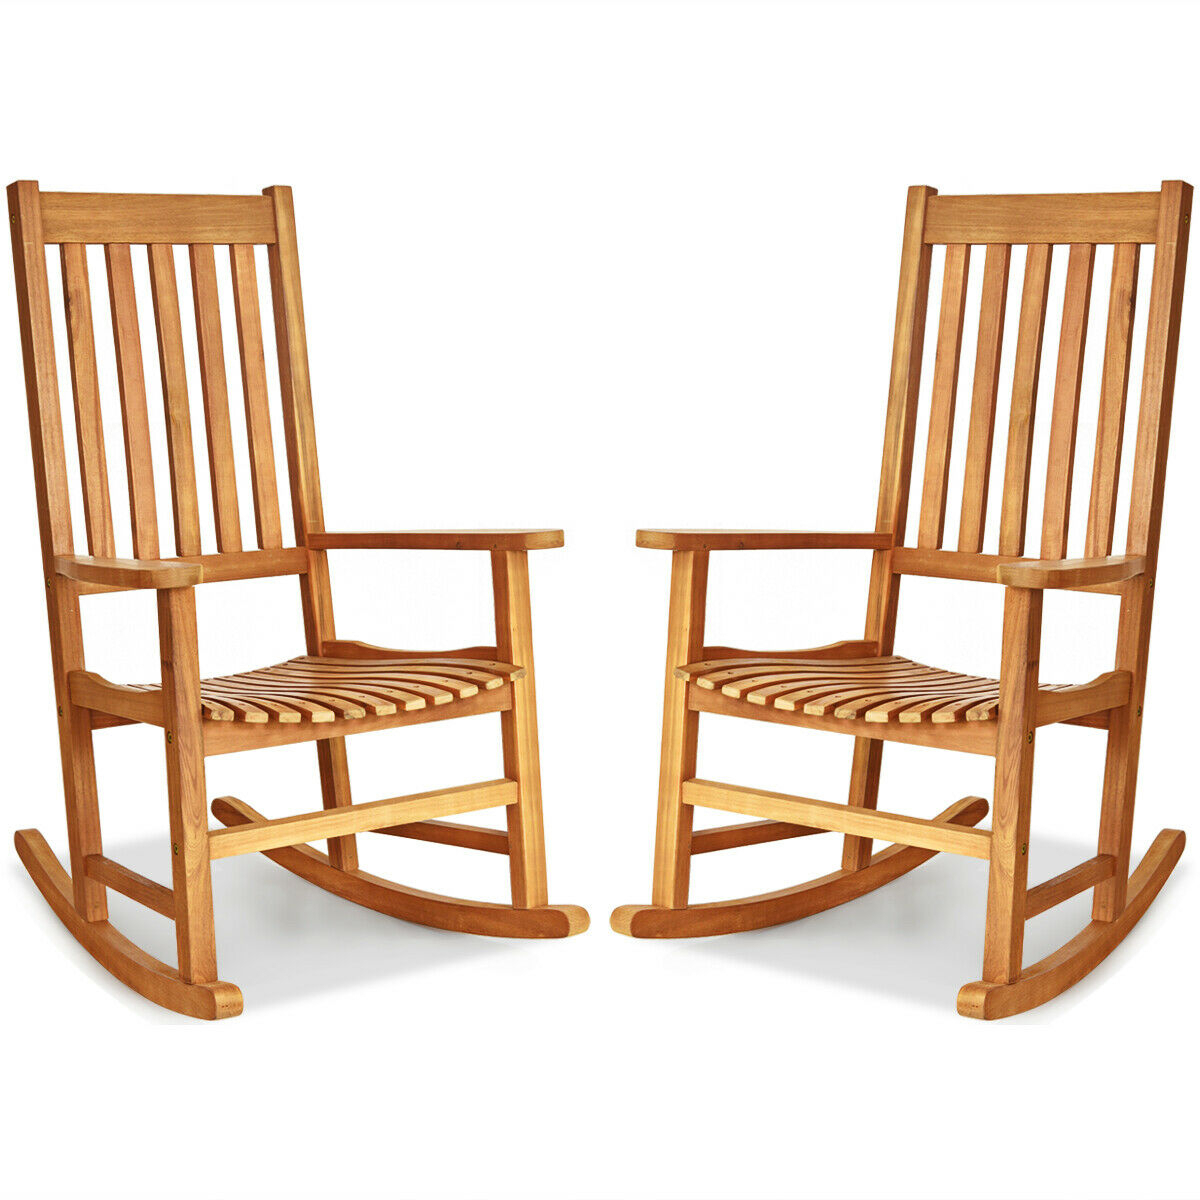 2PCS Wood Rocking Chair Porch Rocker High Back Garden Seat Indoor Outdoor - Teak